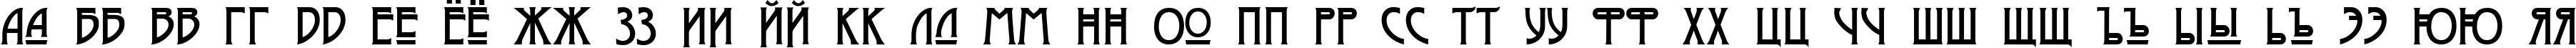 Пример написания русского алфавита шрифтом Moderno Three